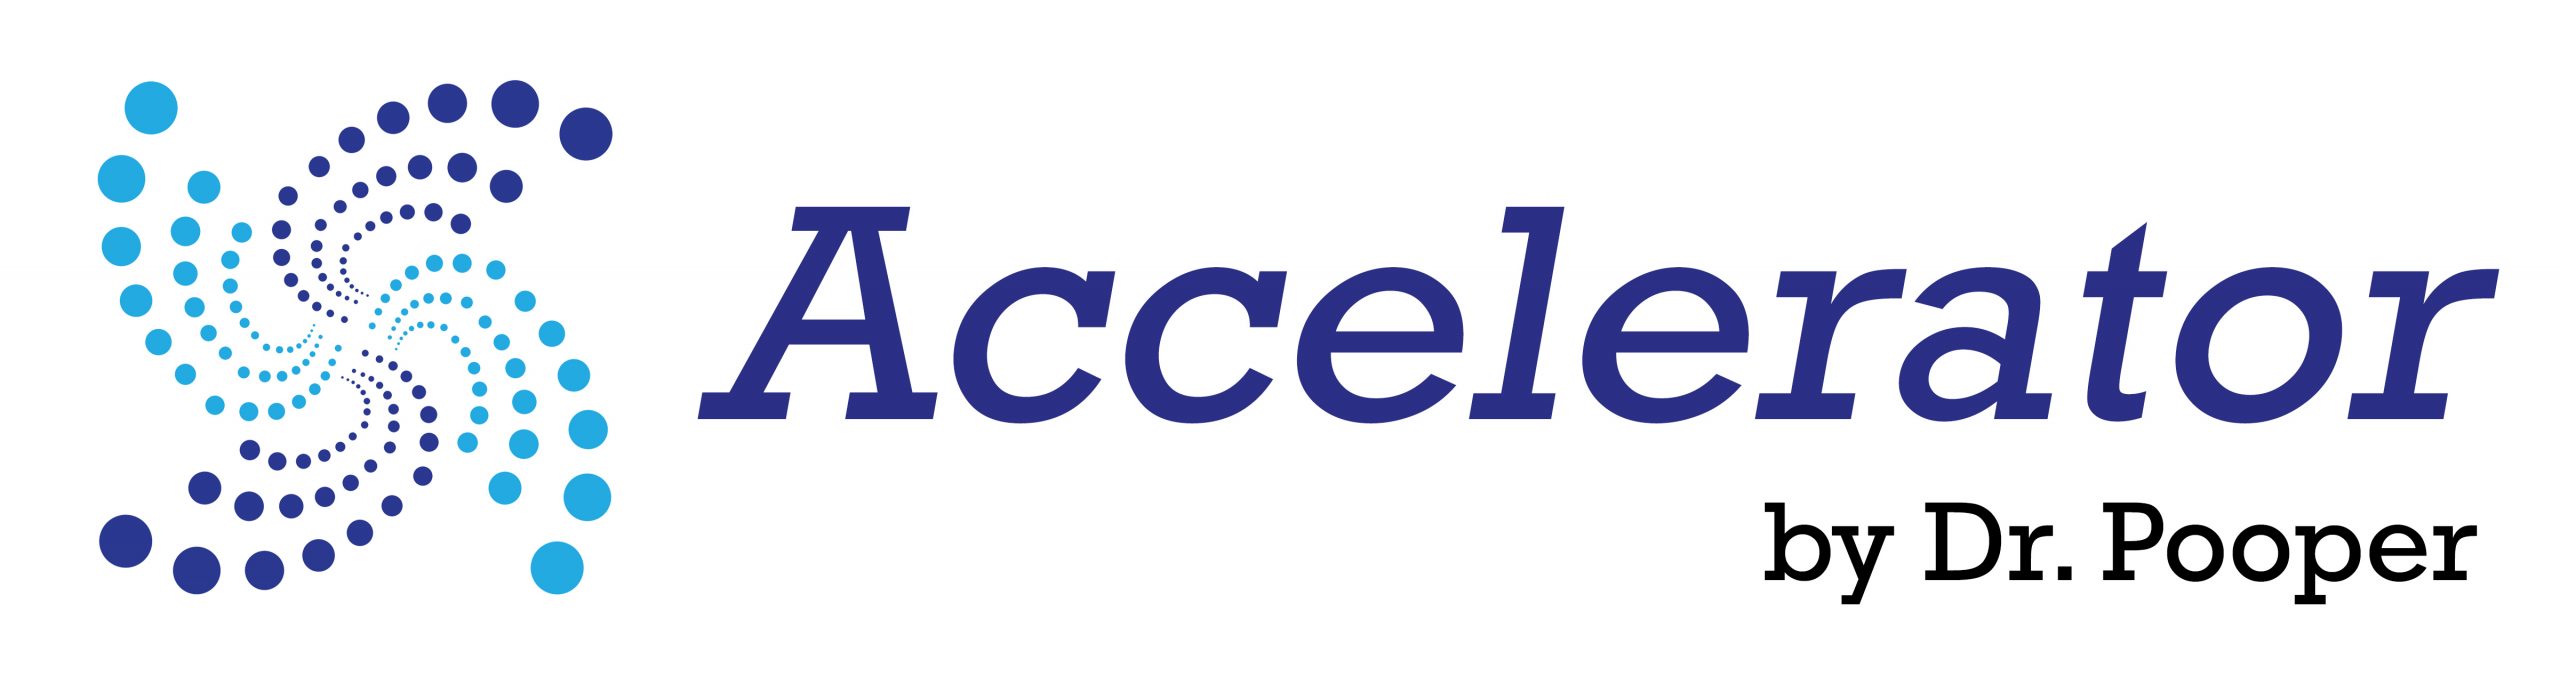 accelerator septic treatment logo